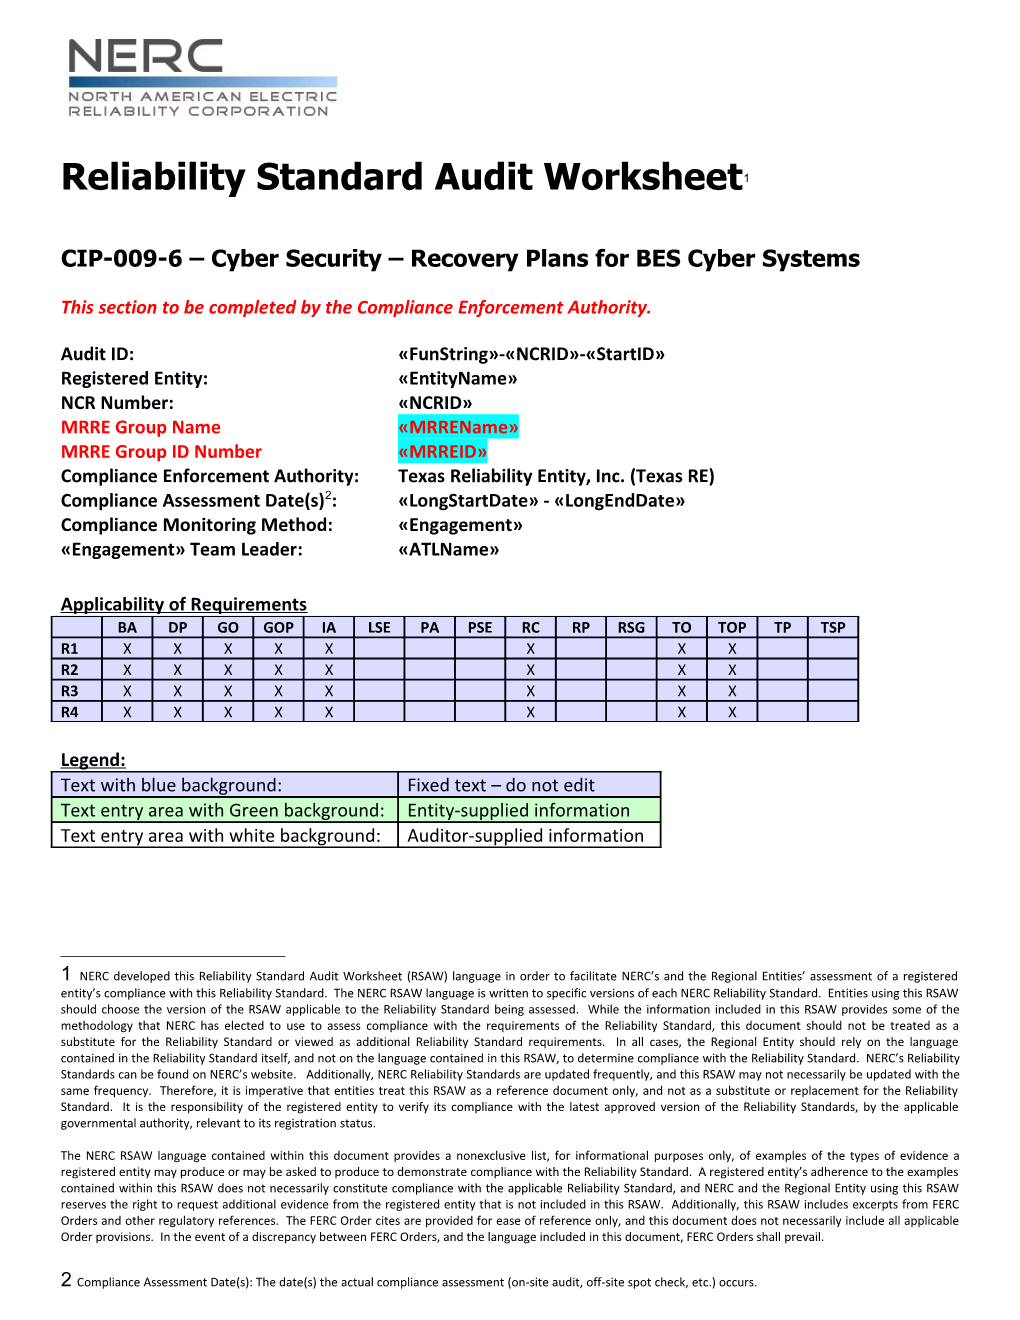 NERC Reliability Standard Audit Worksheet s1